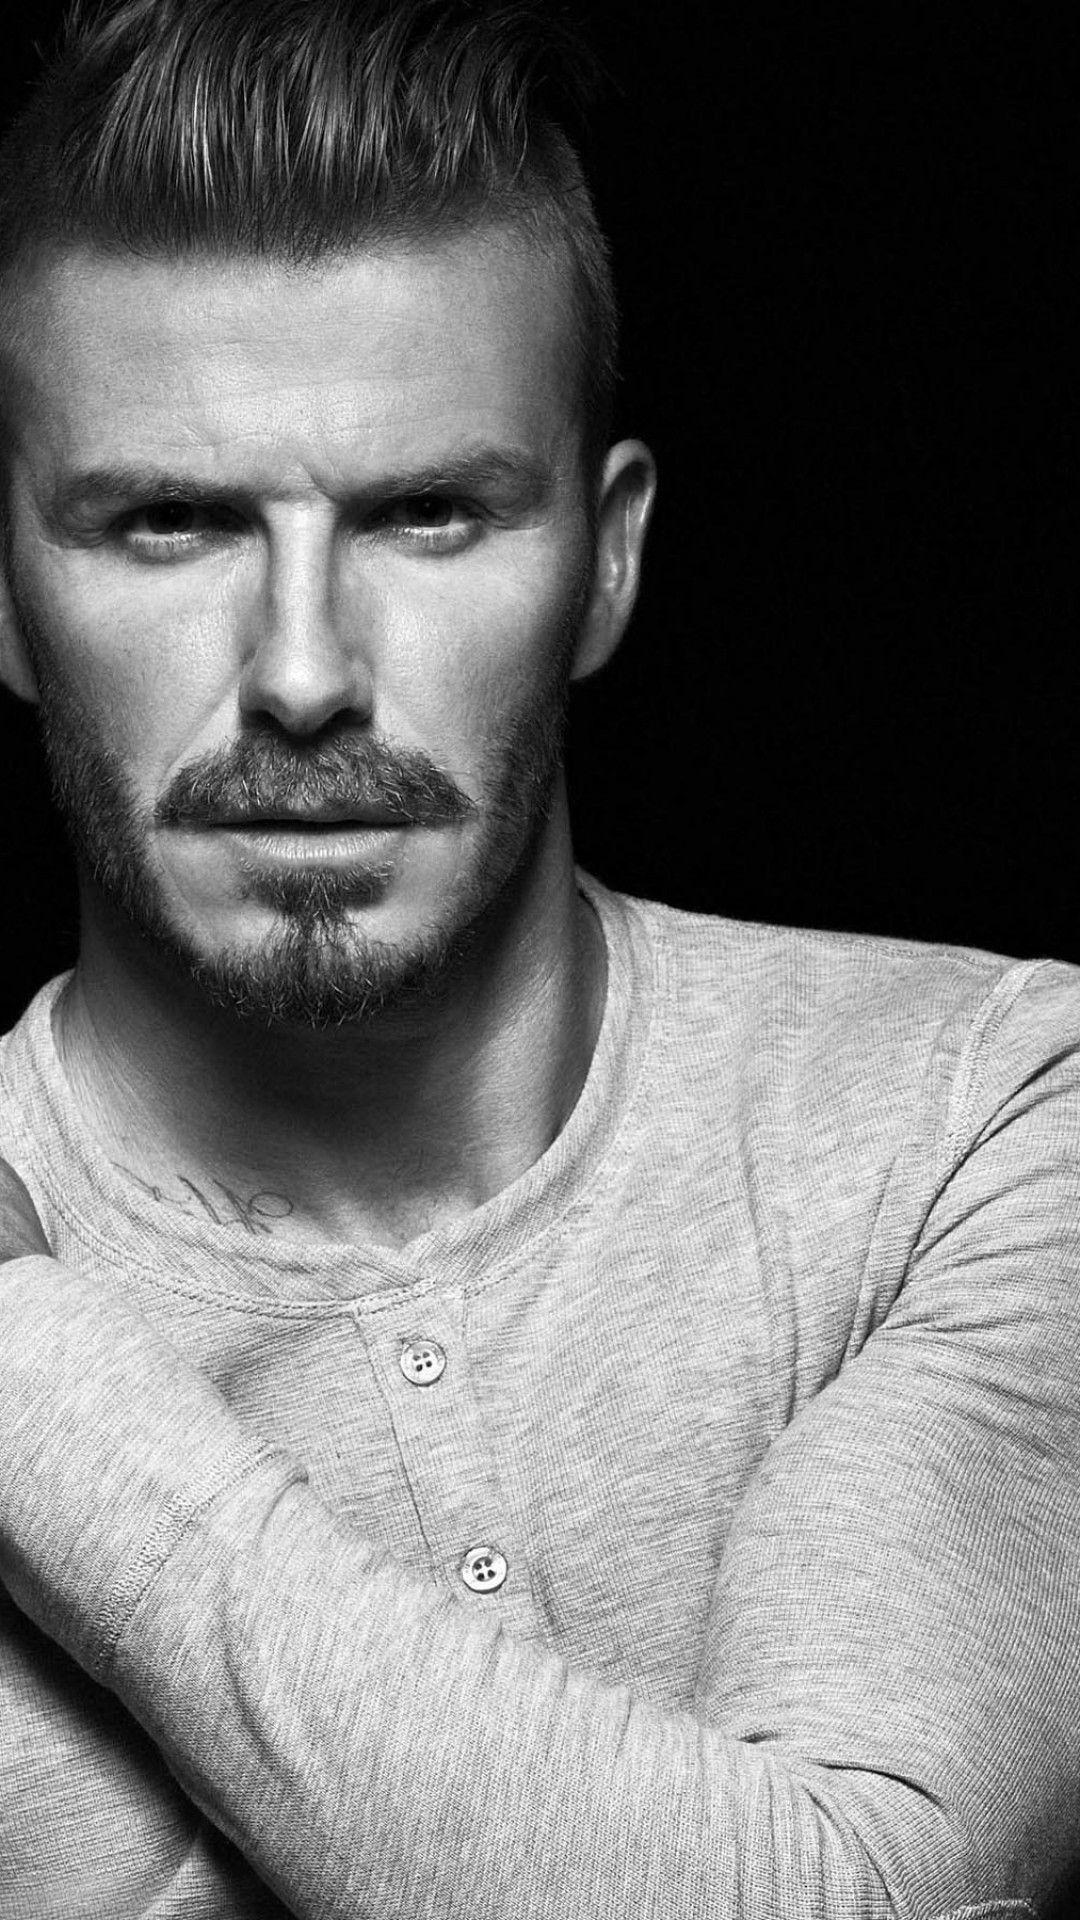 David Beckham Wallpapers - Top Free David Beckham Backgrounds ...